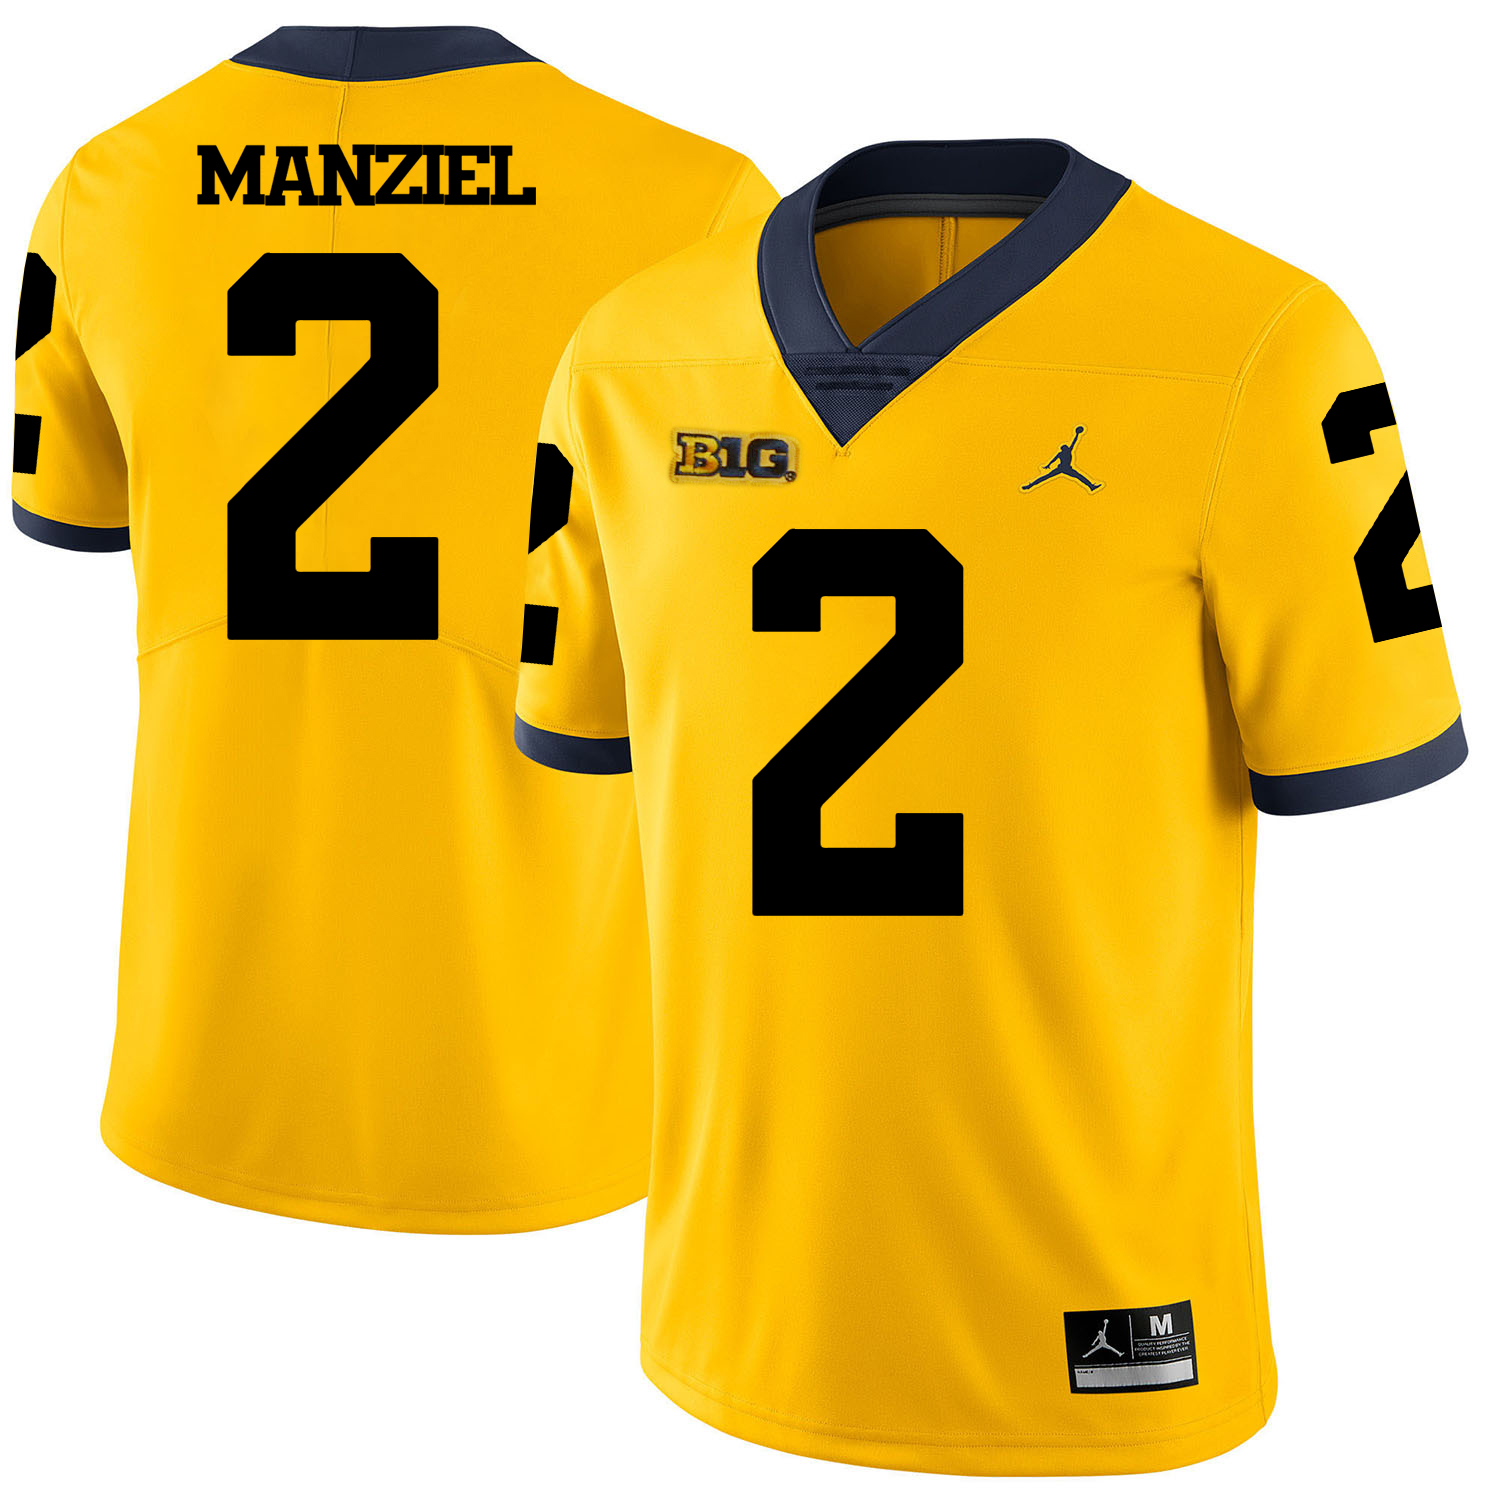 Michigan Wolverines 2 Johnny Manziel Yellow College Football Jersey